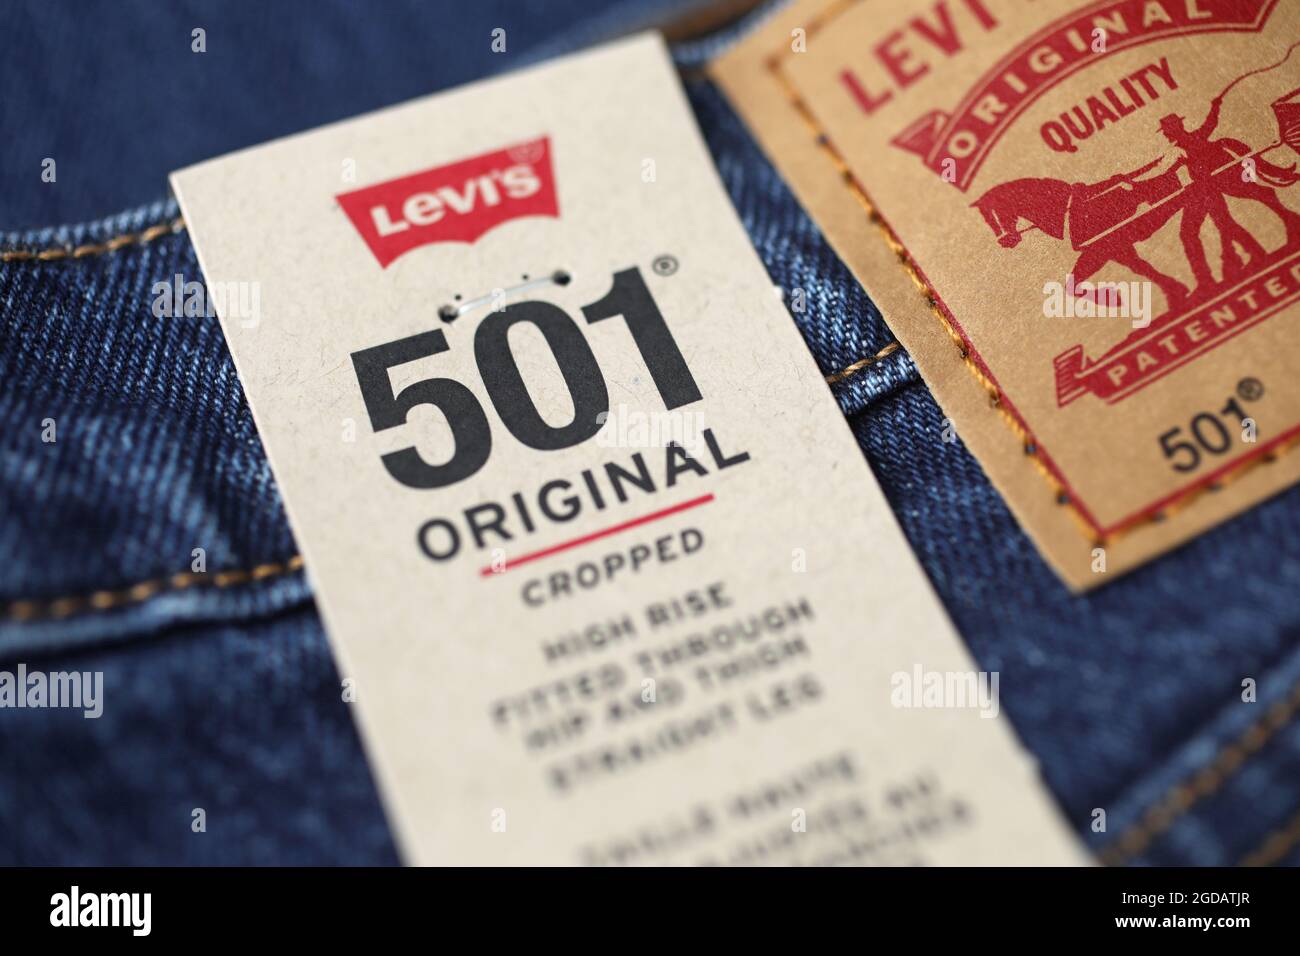 Levi's 501 Original Jeans von Levi Strauss & Co Stockfotografie - Alamy